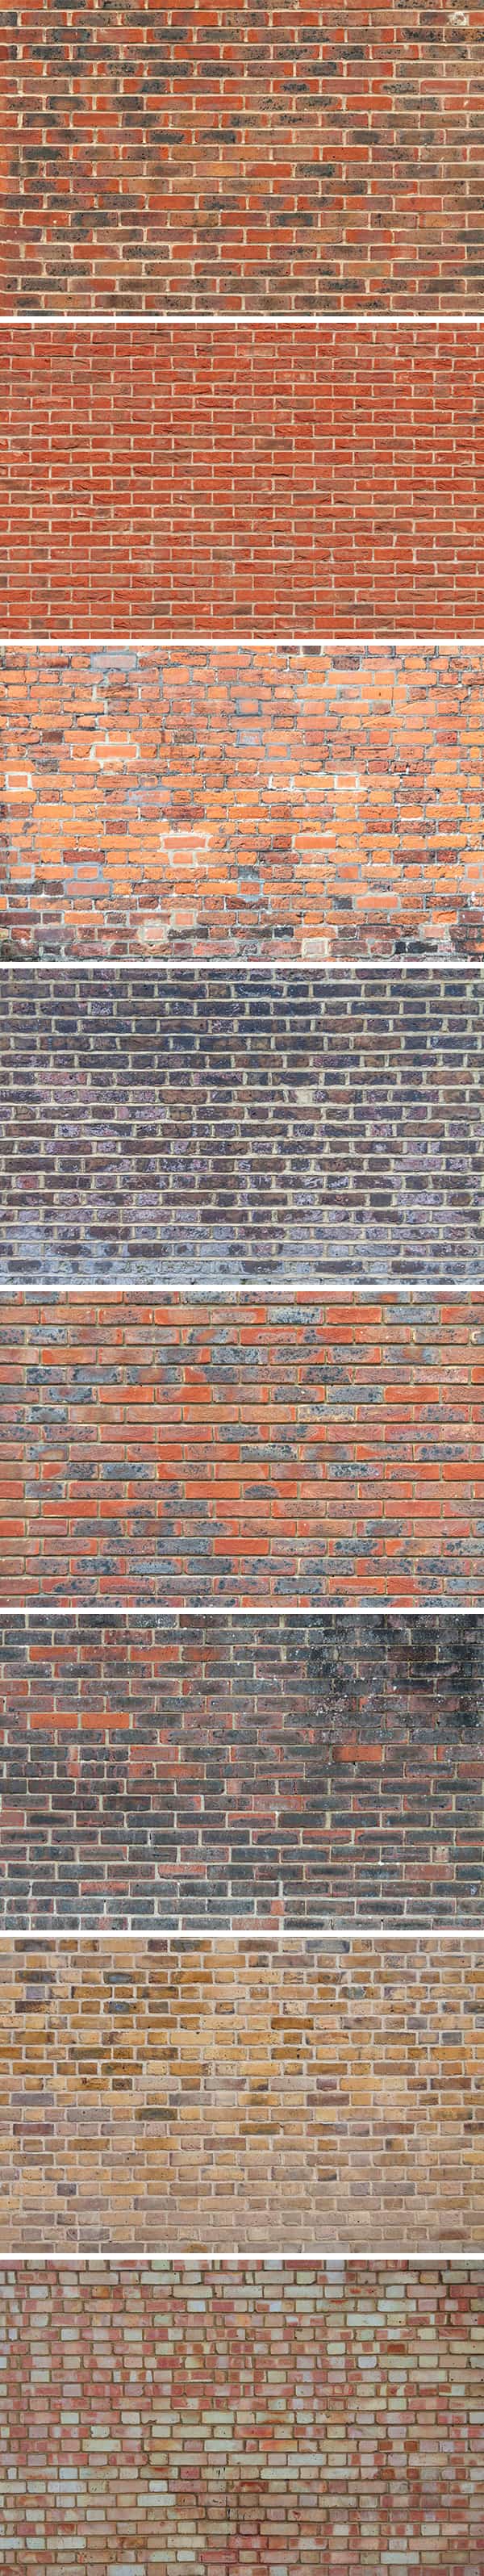 8-Brick-Wall-Textures